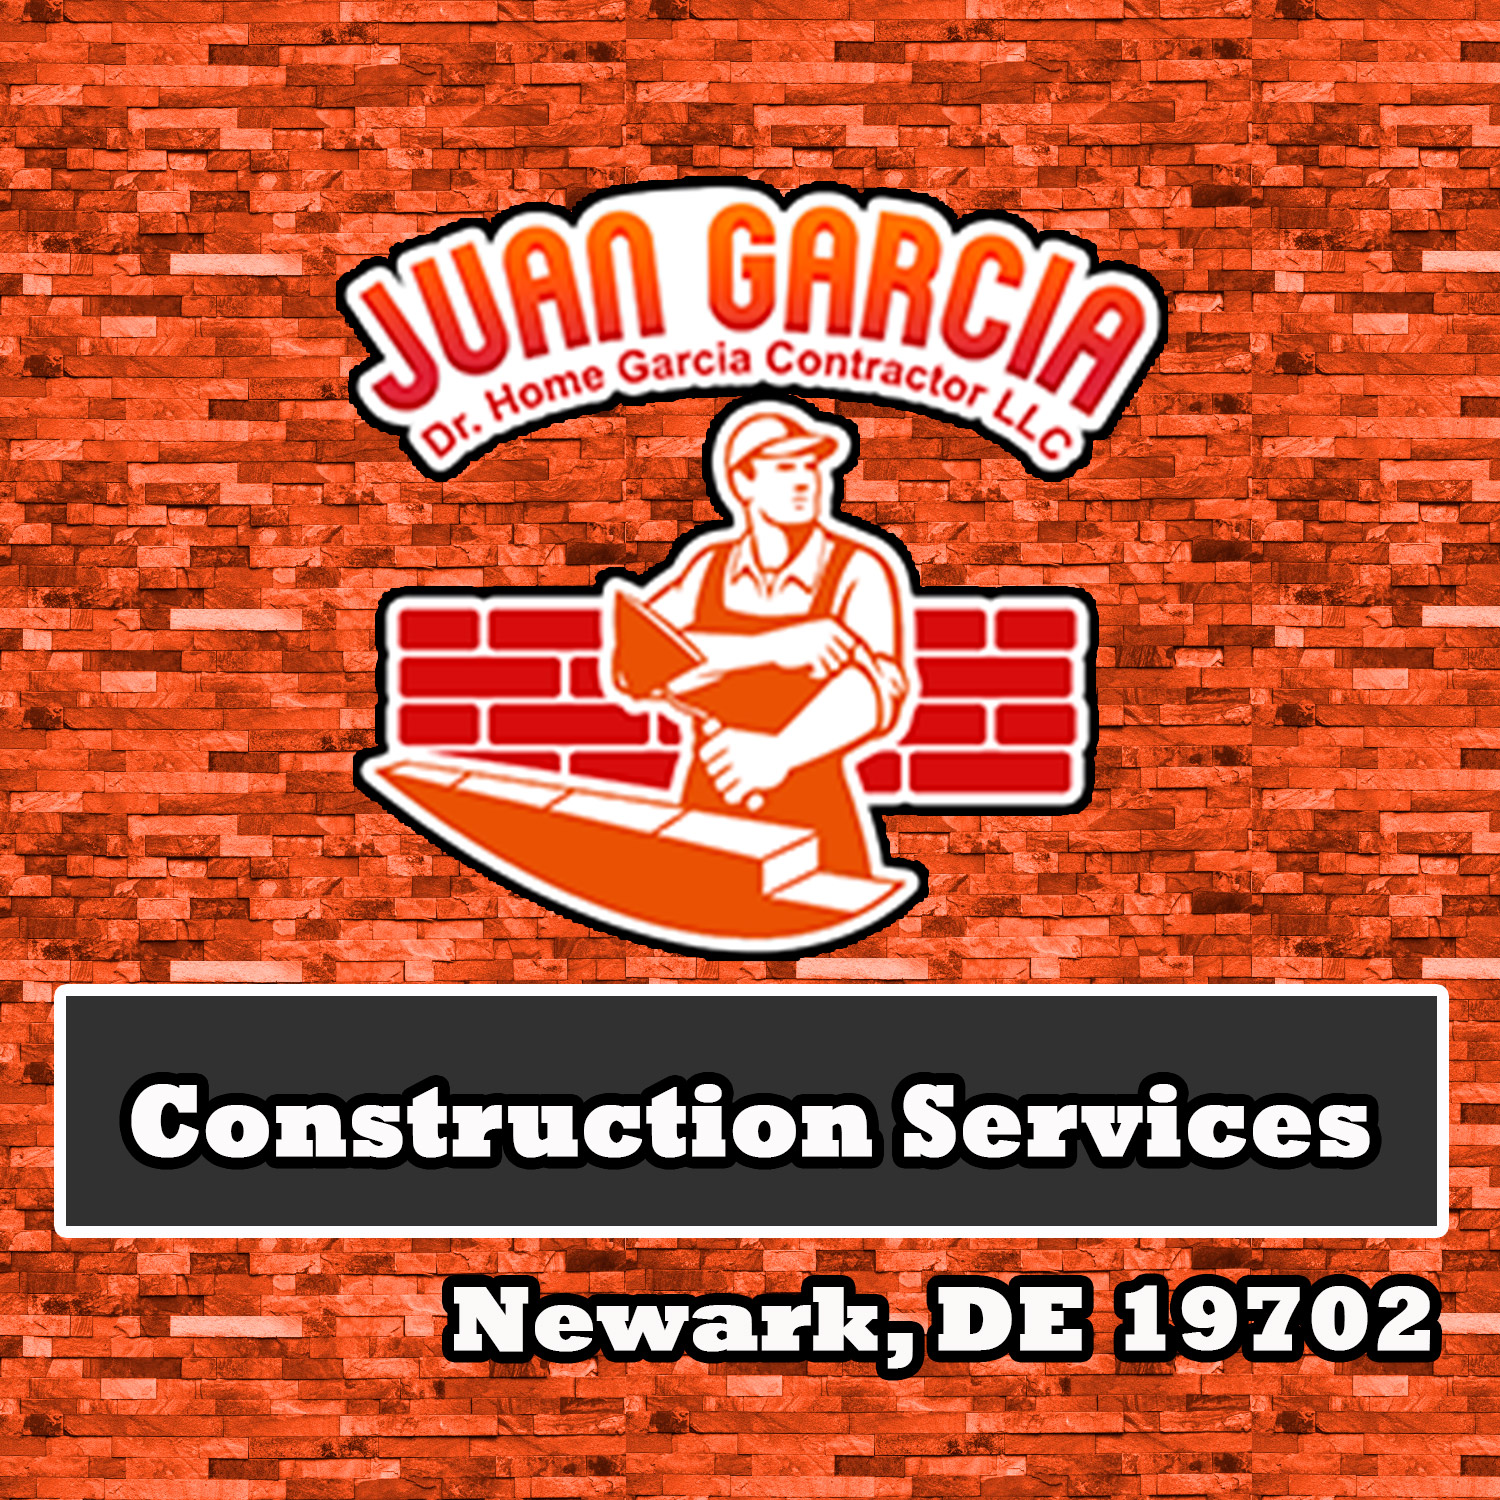 DR Home Garcia Contractor LLC